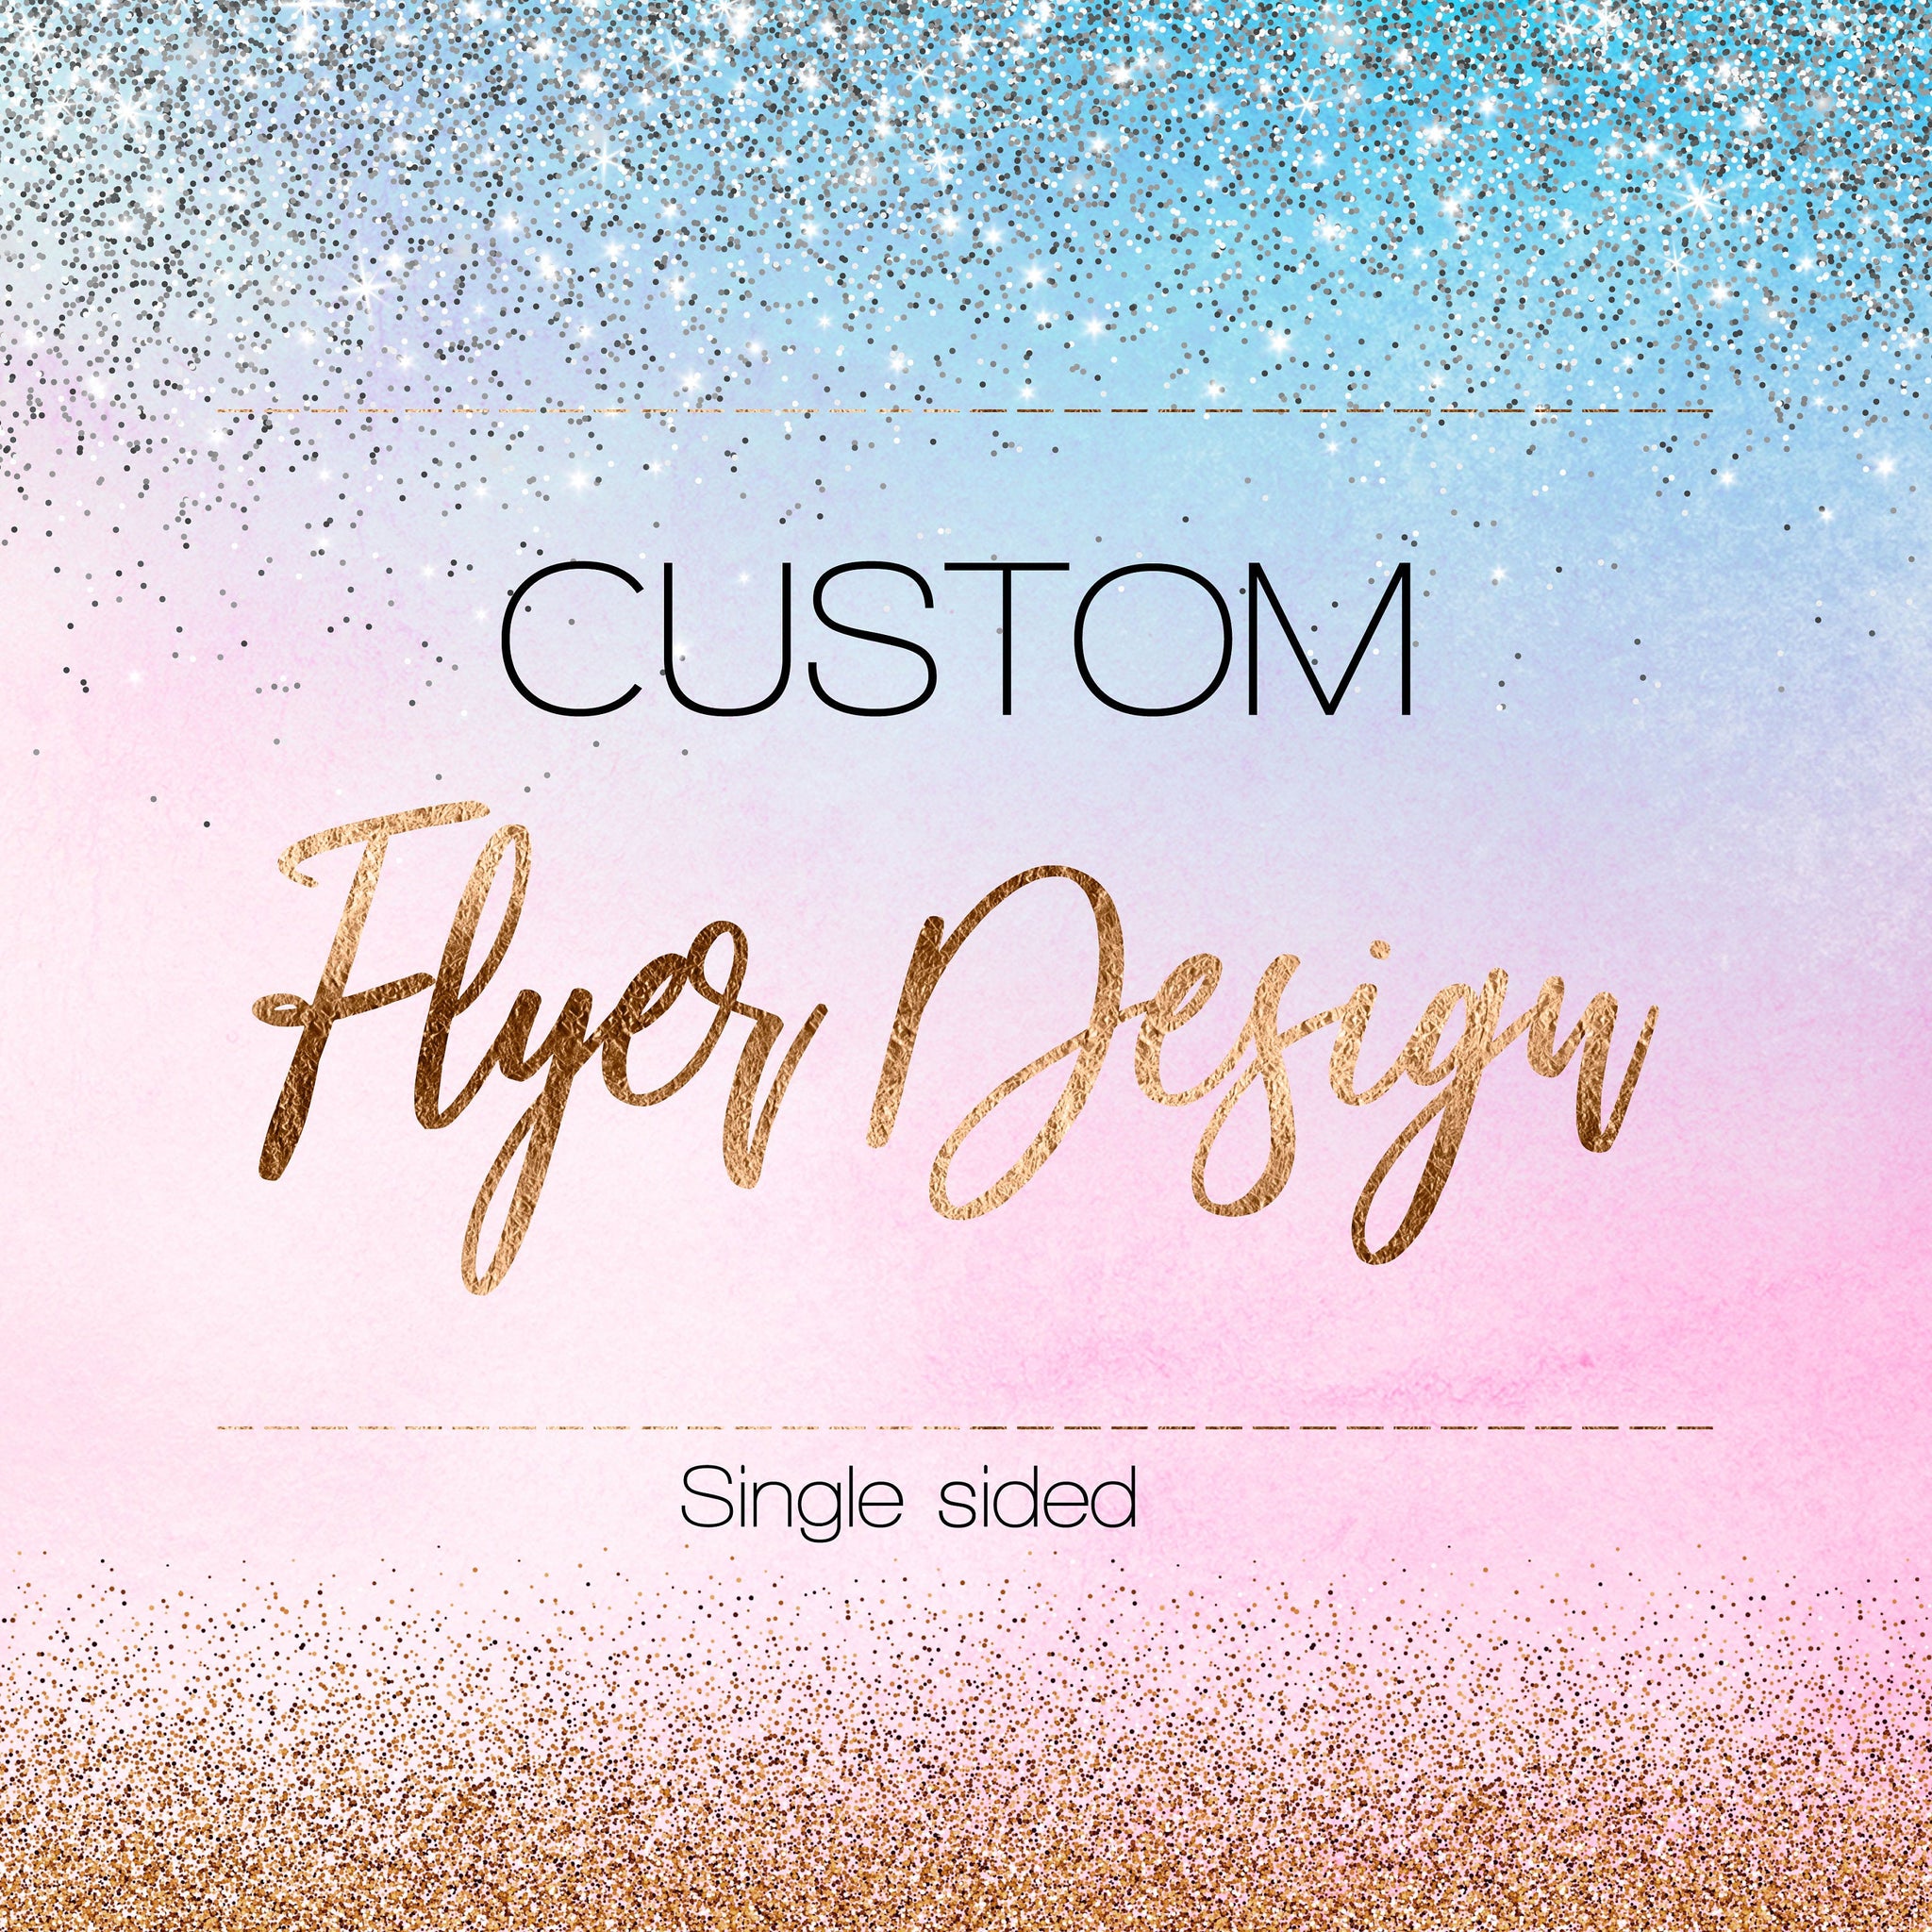 Custom Flyer design - Single side - Business Flyer - Photography Flyer Design - Professional Flyer - Shop Flyer - Party Flyer